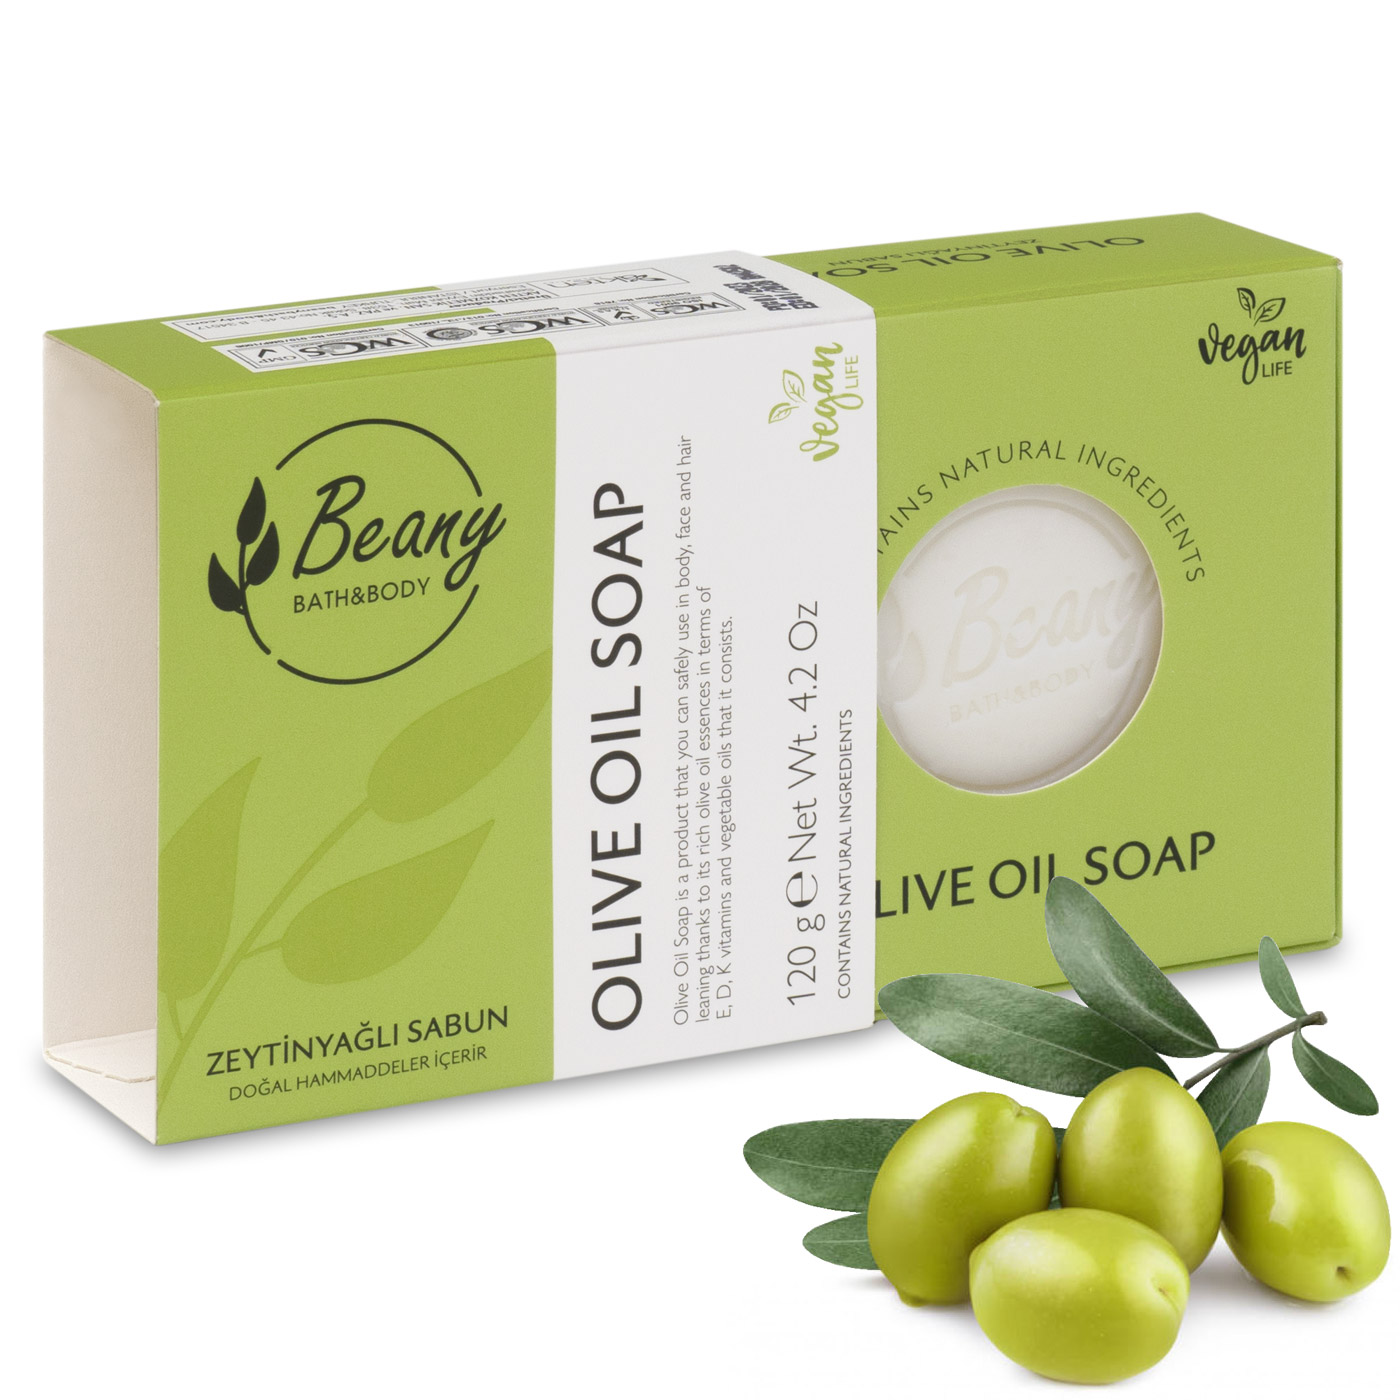 Мыло Beany твердое натуральное турецкое Olive Oil Soap с оливковым маслом мыло beany твердое натуральное турецкое apricot soap абрикосовое